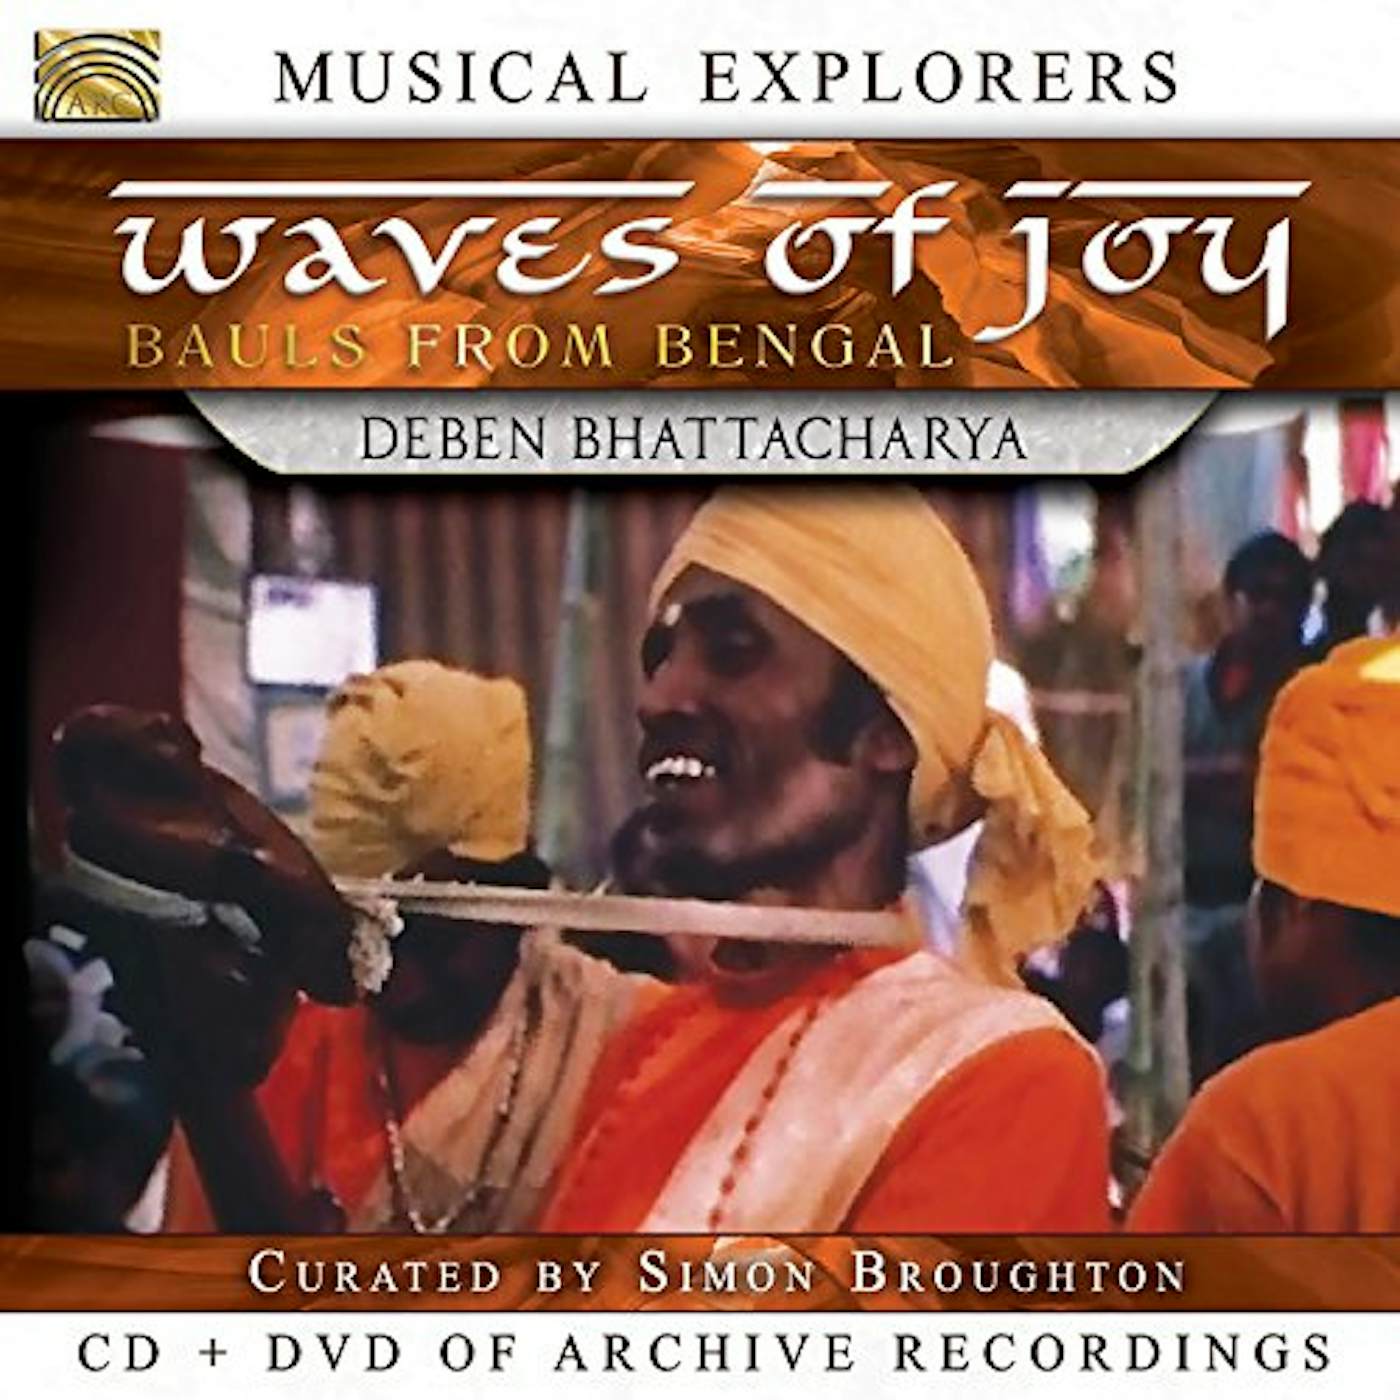 Deben Bhattacharya WAVES OF JOY / BAULS OF BENGAL CD